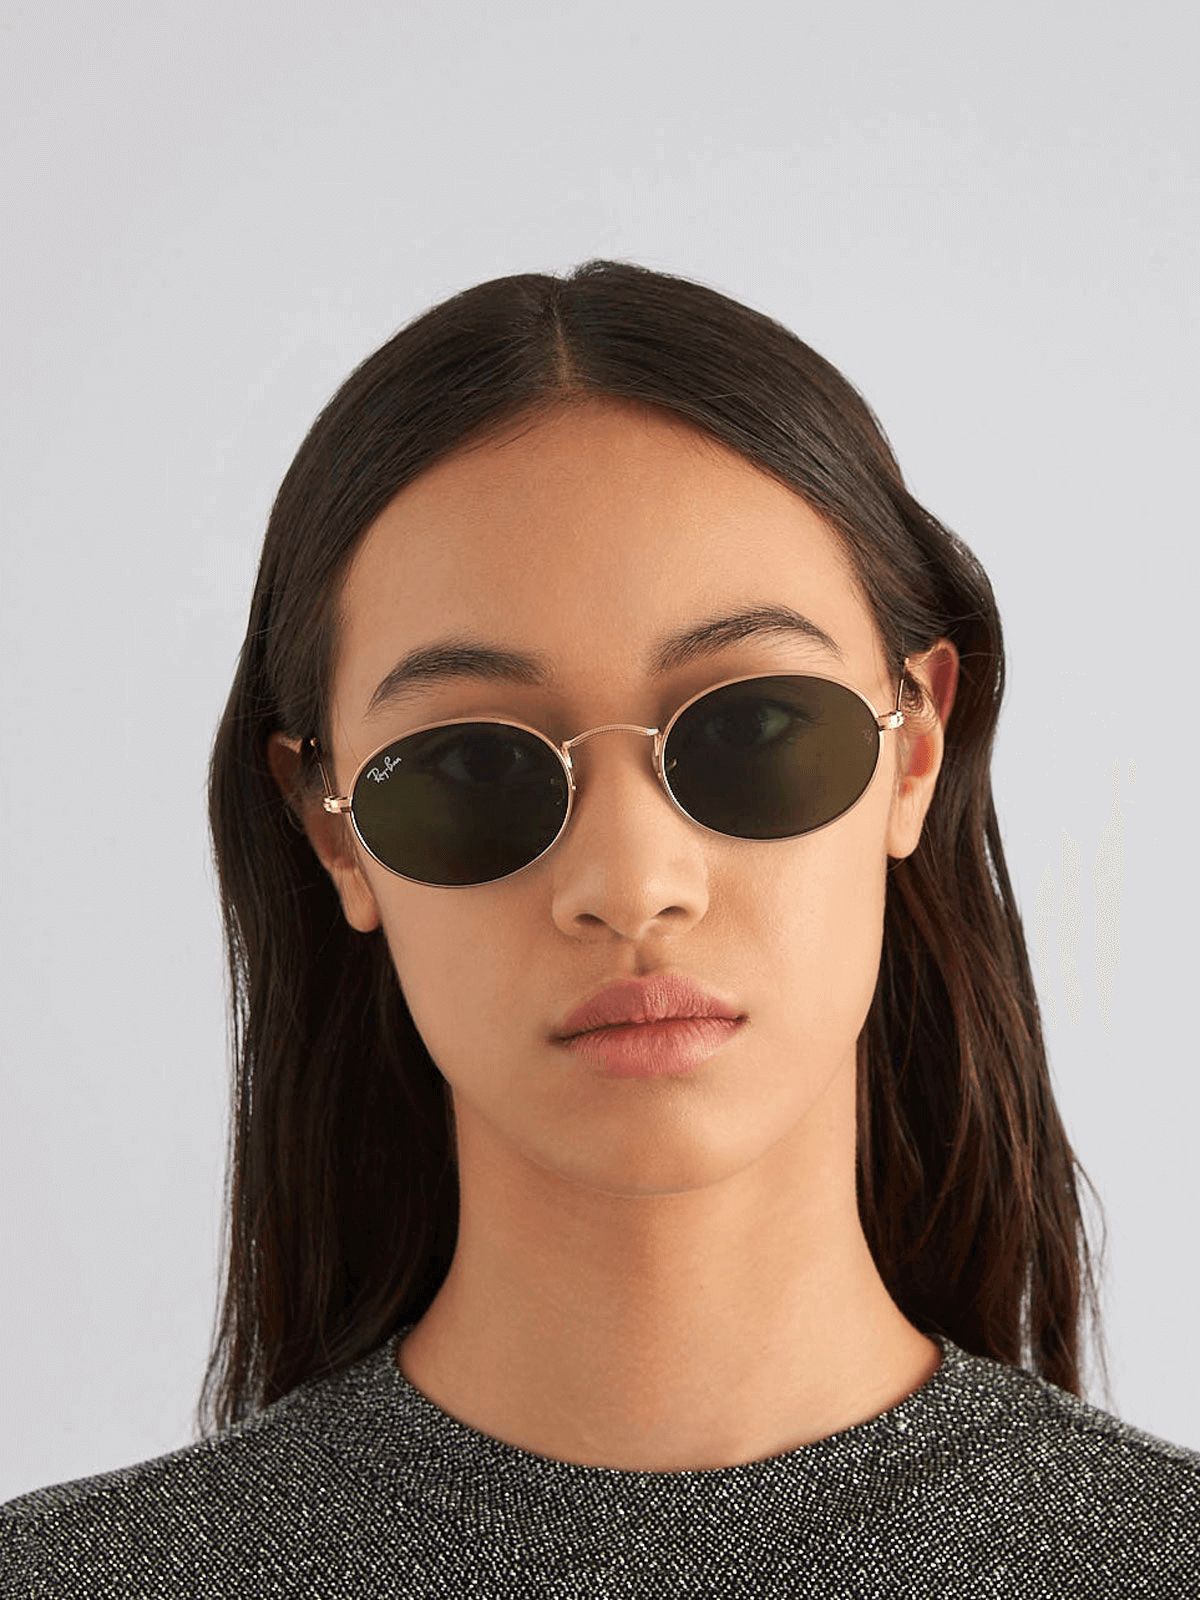 ray ban oval sunglasses black